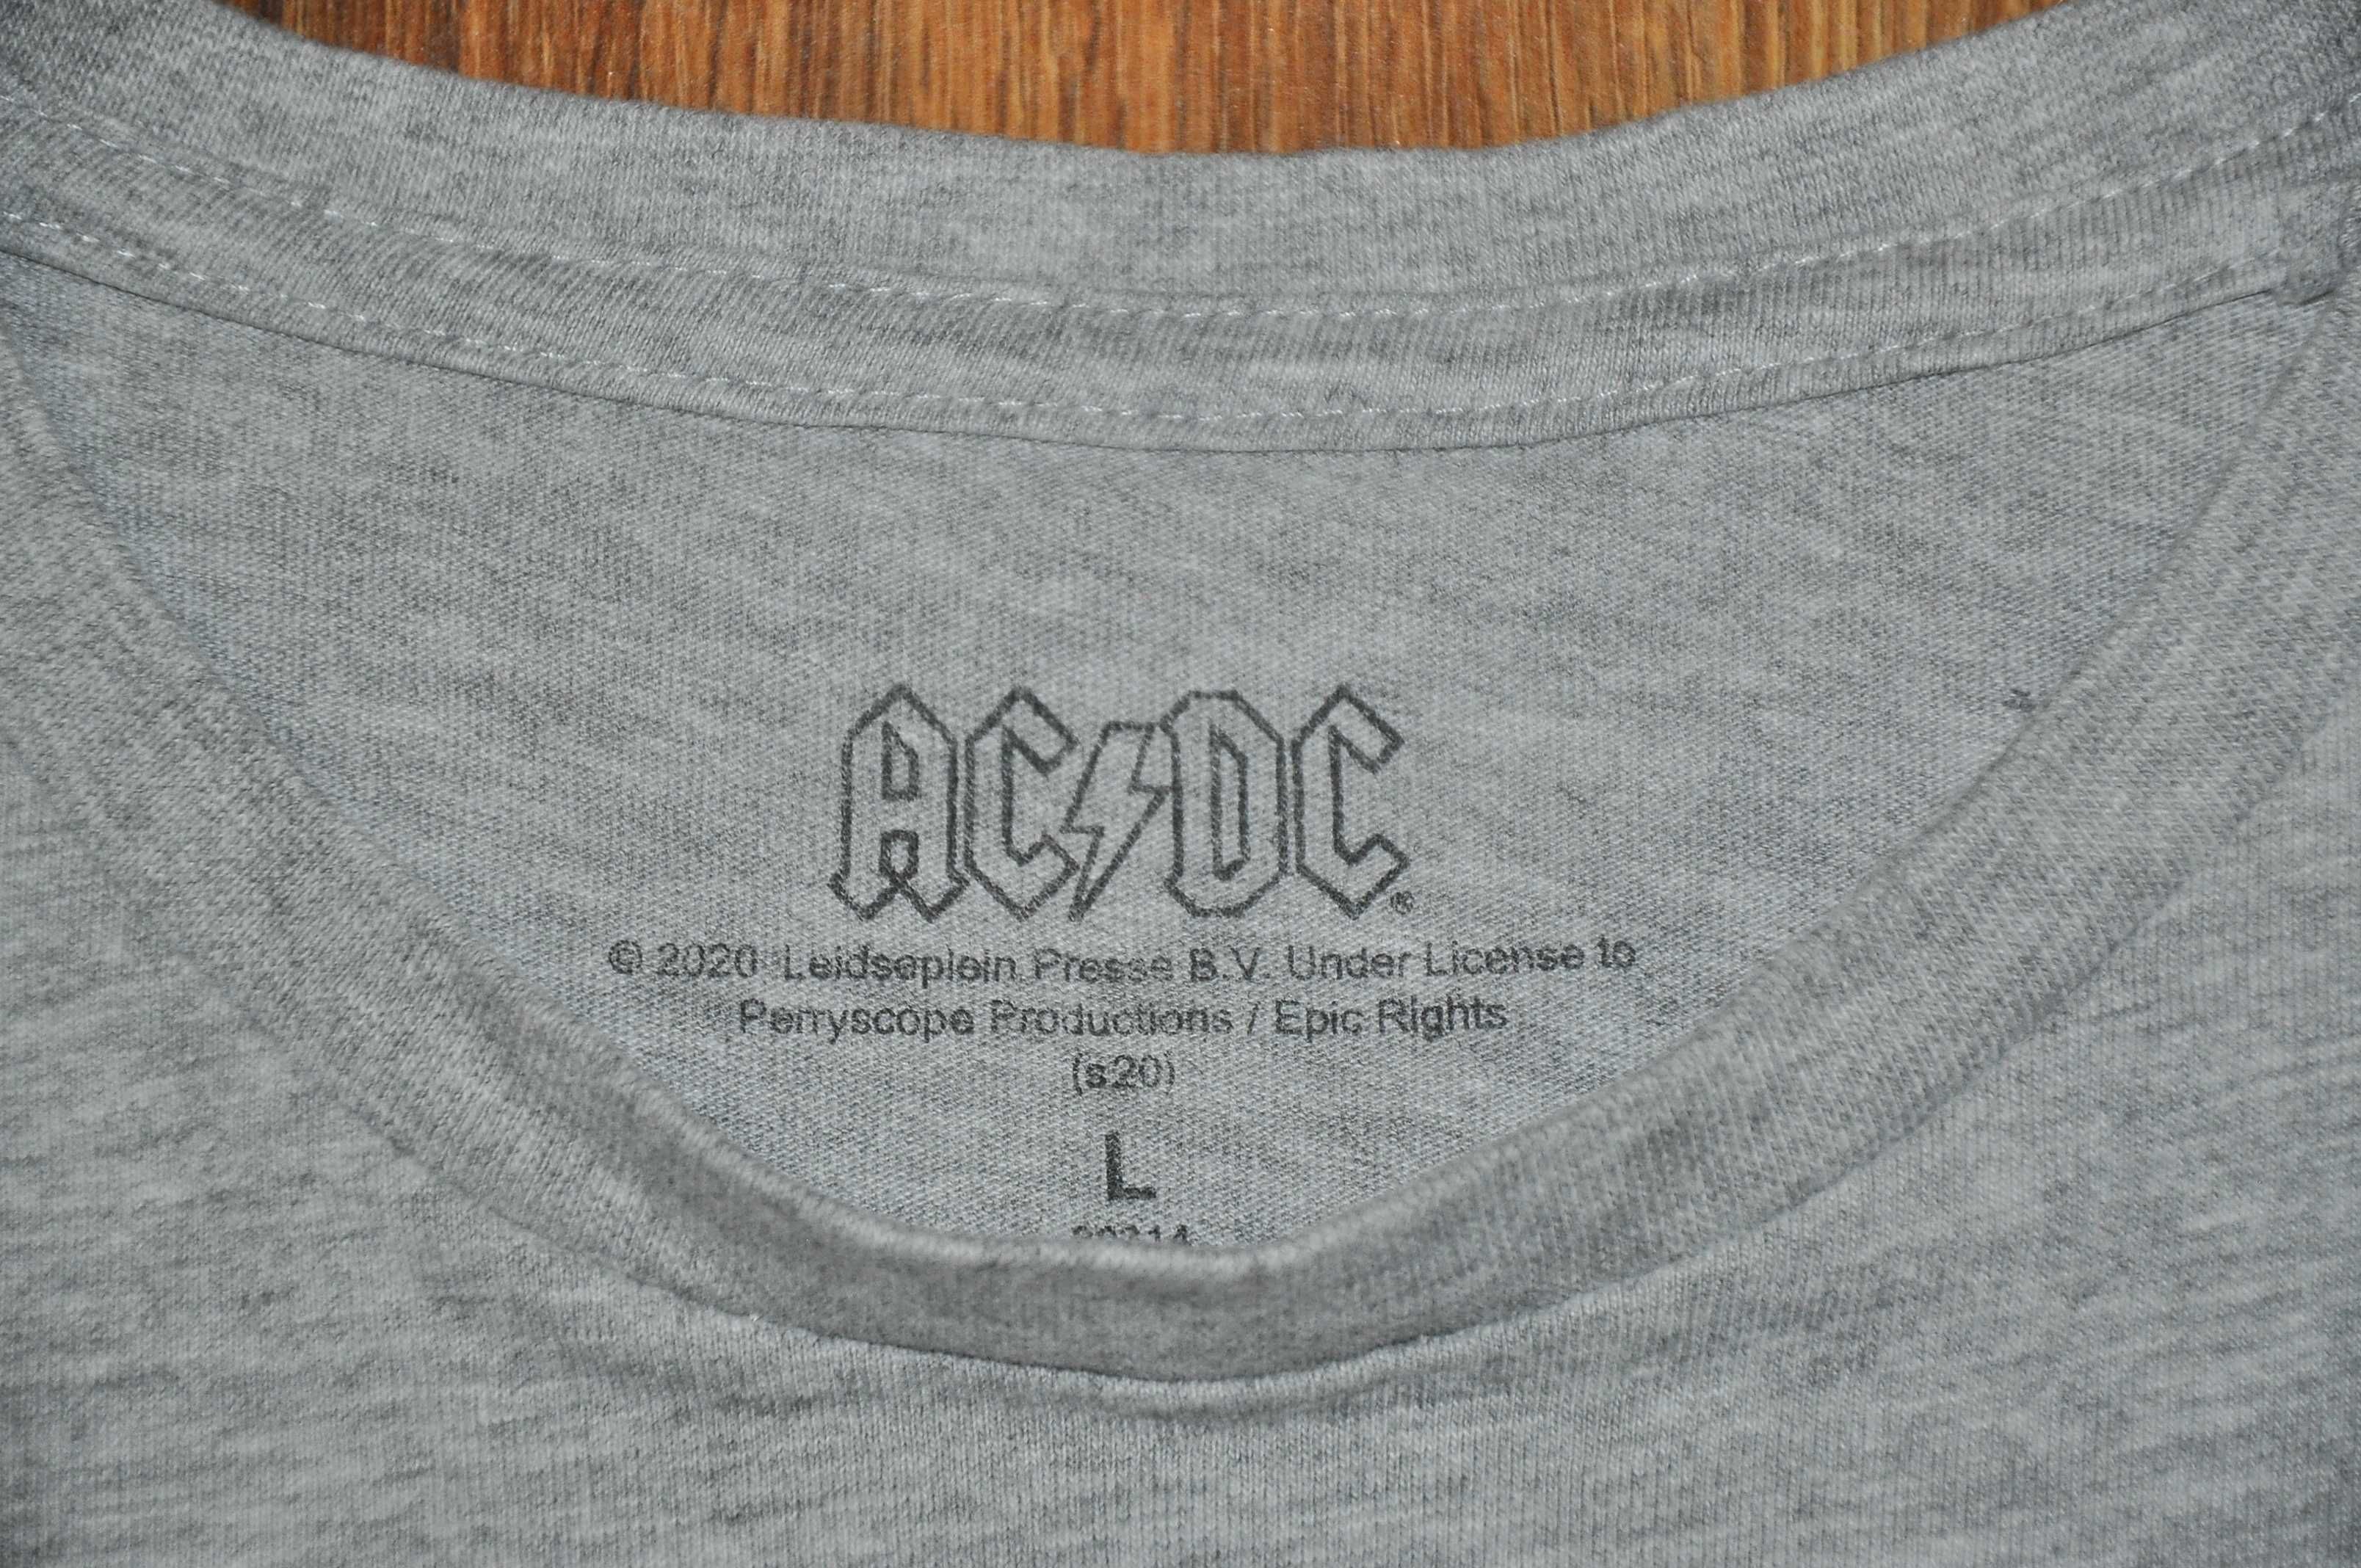 AC/DC - High Voltage - koszulka rozm.L